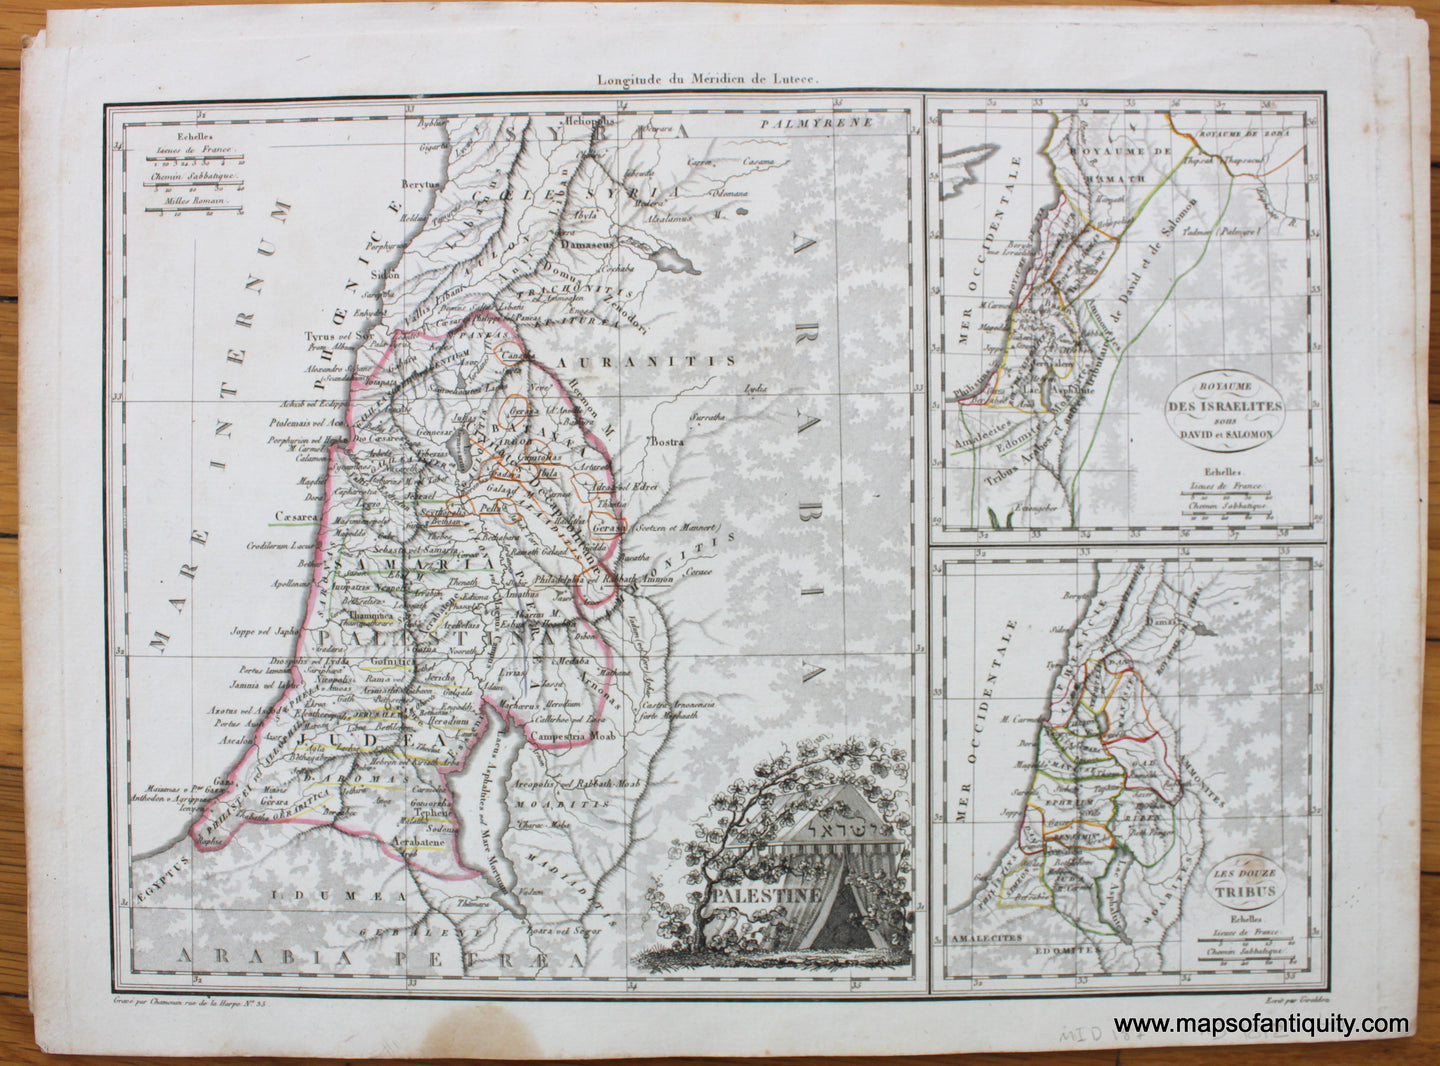 Antique-Hand-Colored-Map-Palestine-1812-Malte-Brun-Lapie-1800s-19th-century-Maps-of-Antiquity